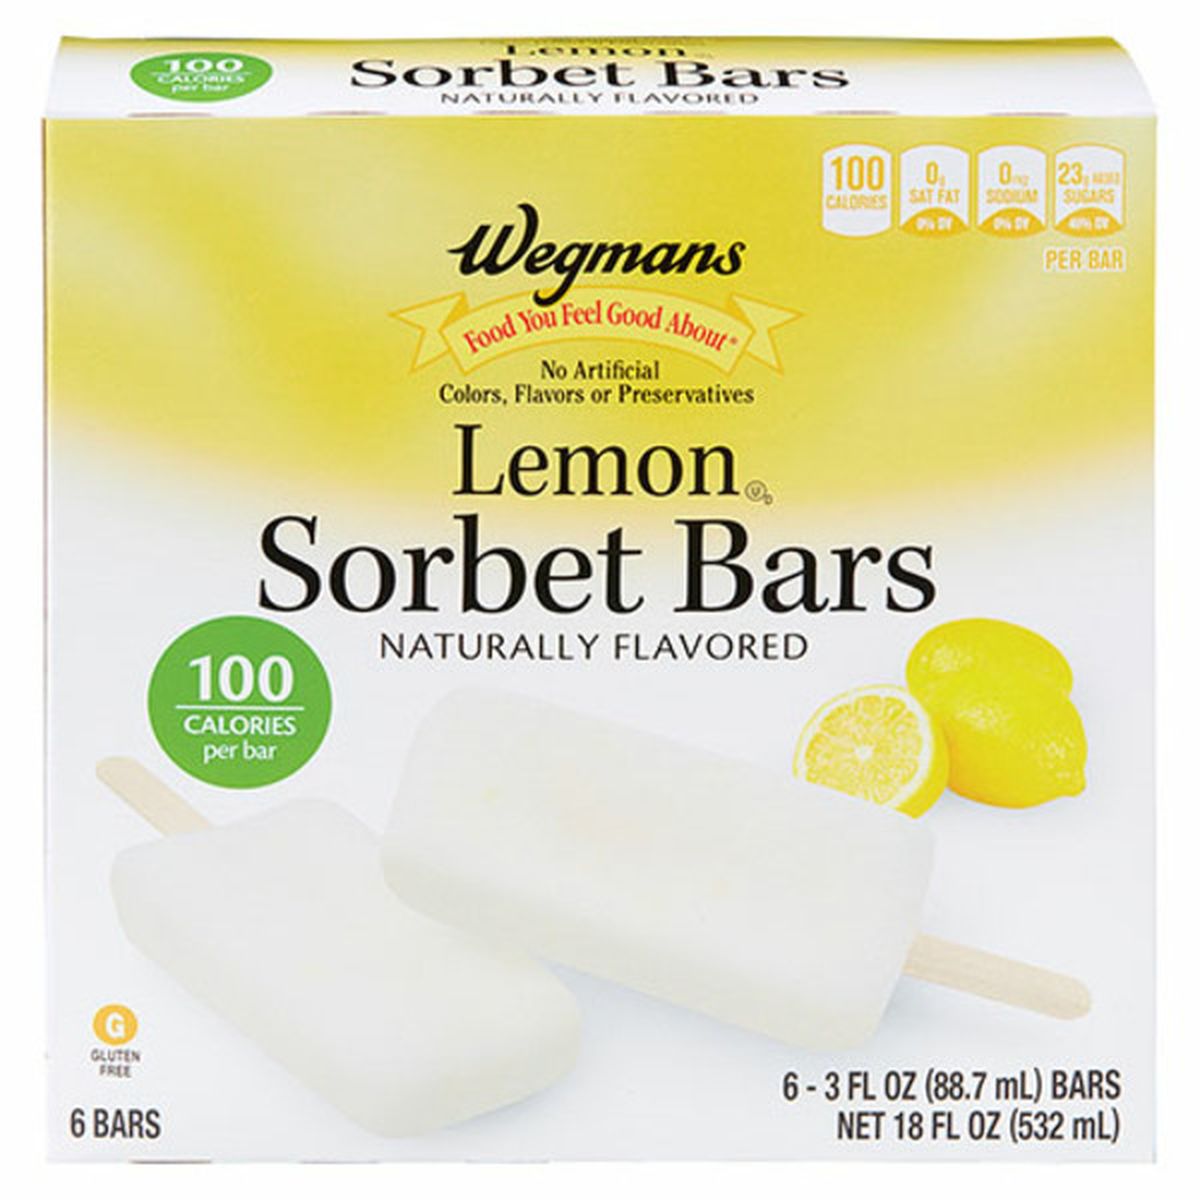 Calories in Wegmans Lemon Sorbet Bars